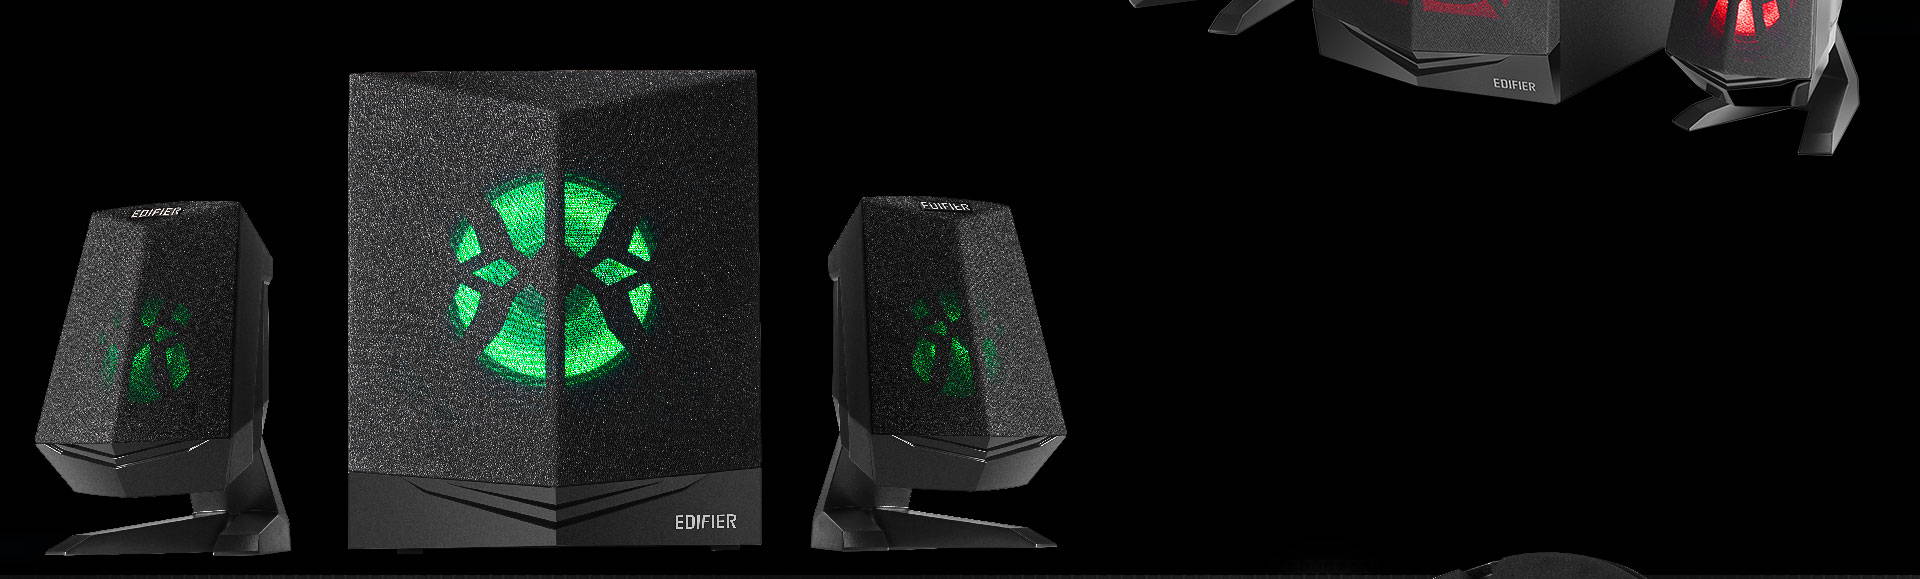 Gaming RGB Speaker Edifier X230 2.1 Multimedia Price in Pakistan